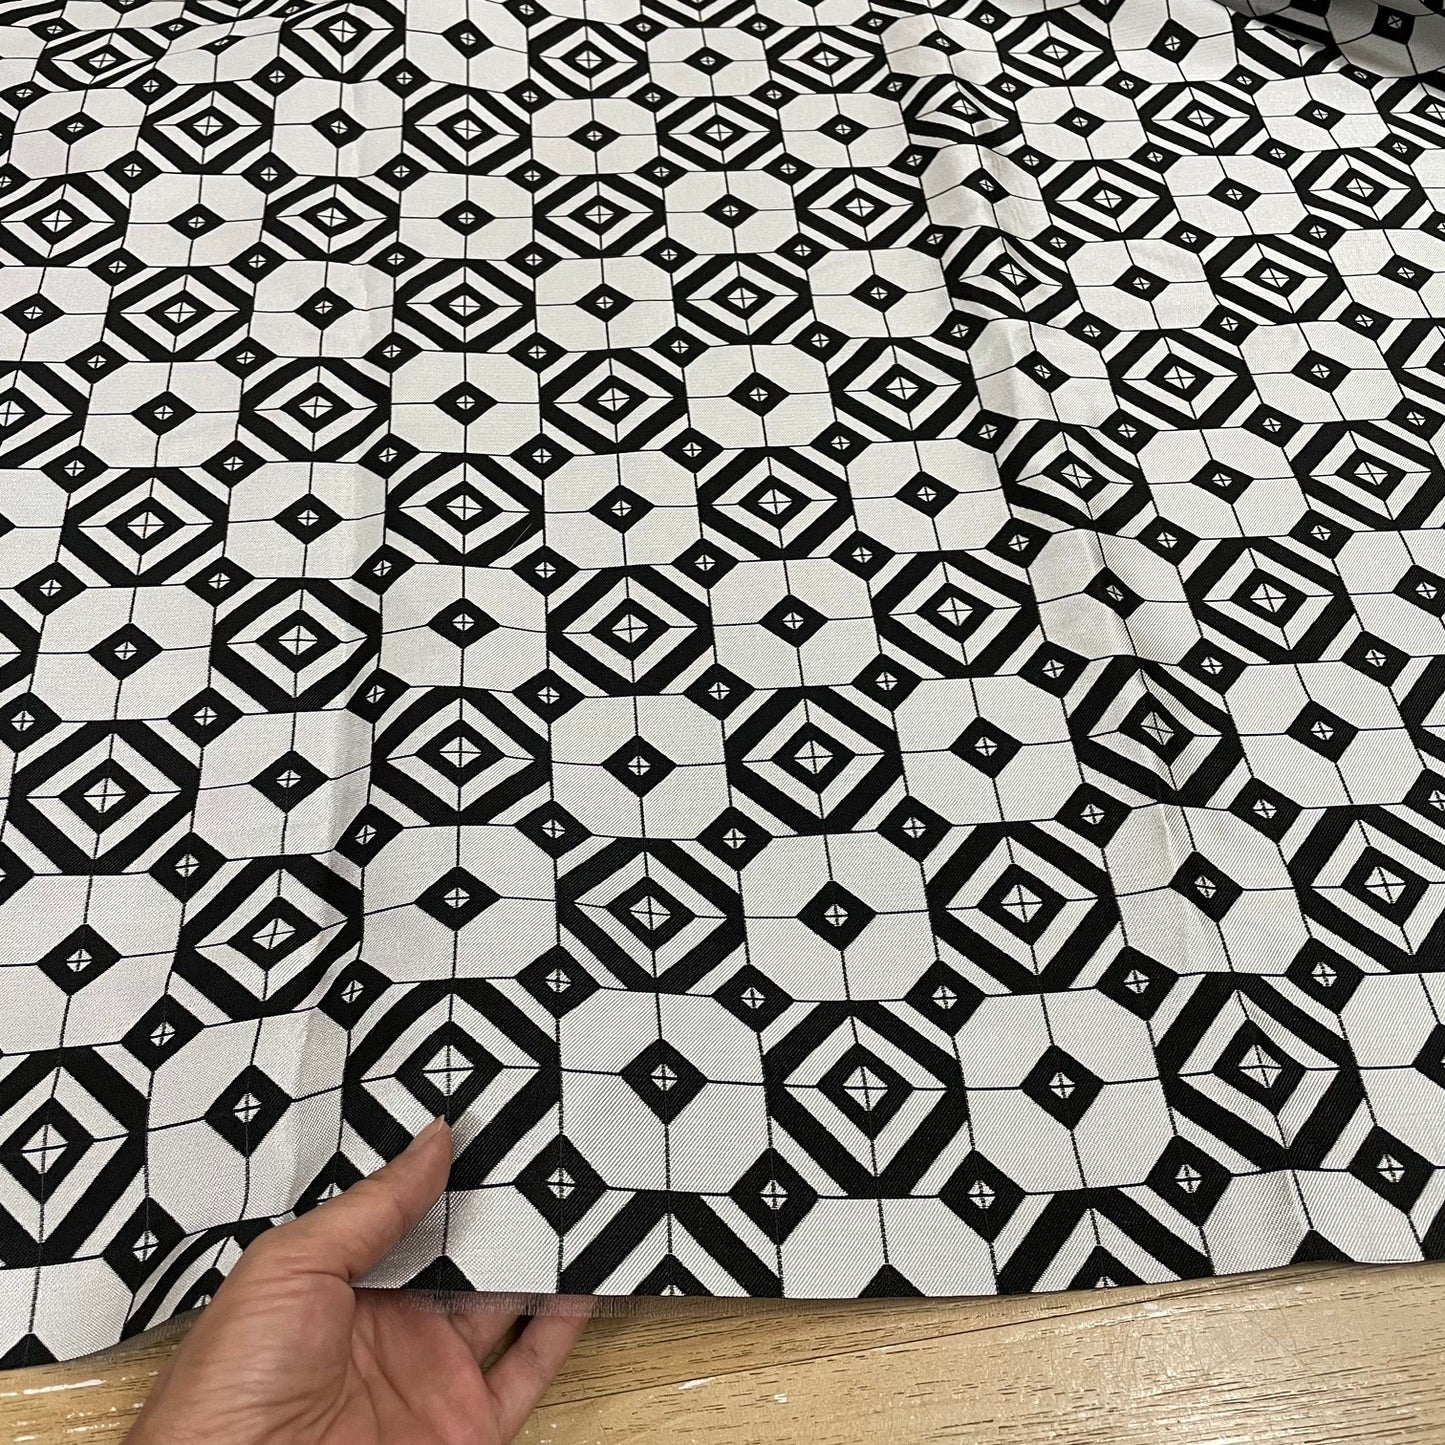 J05 Jacquard Fabric Black and White